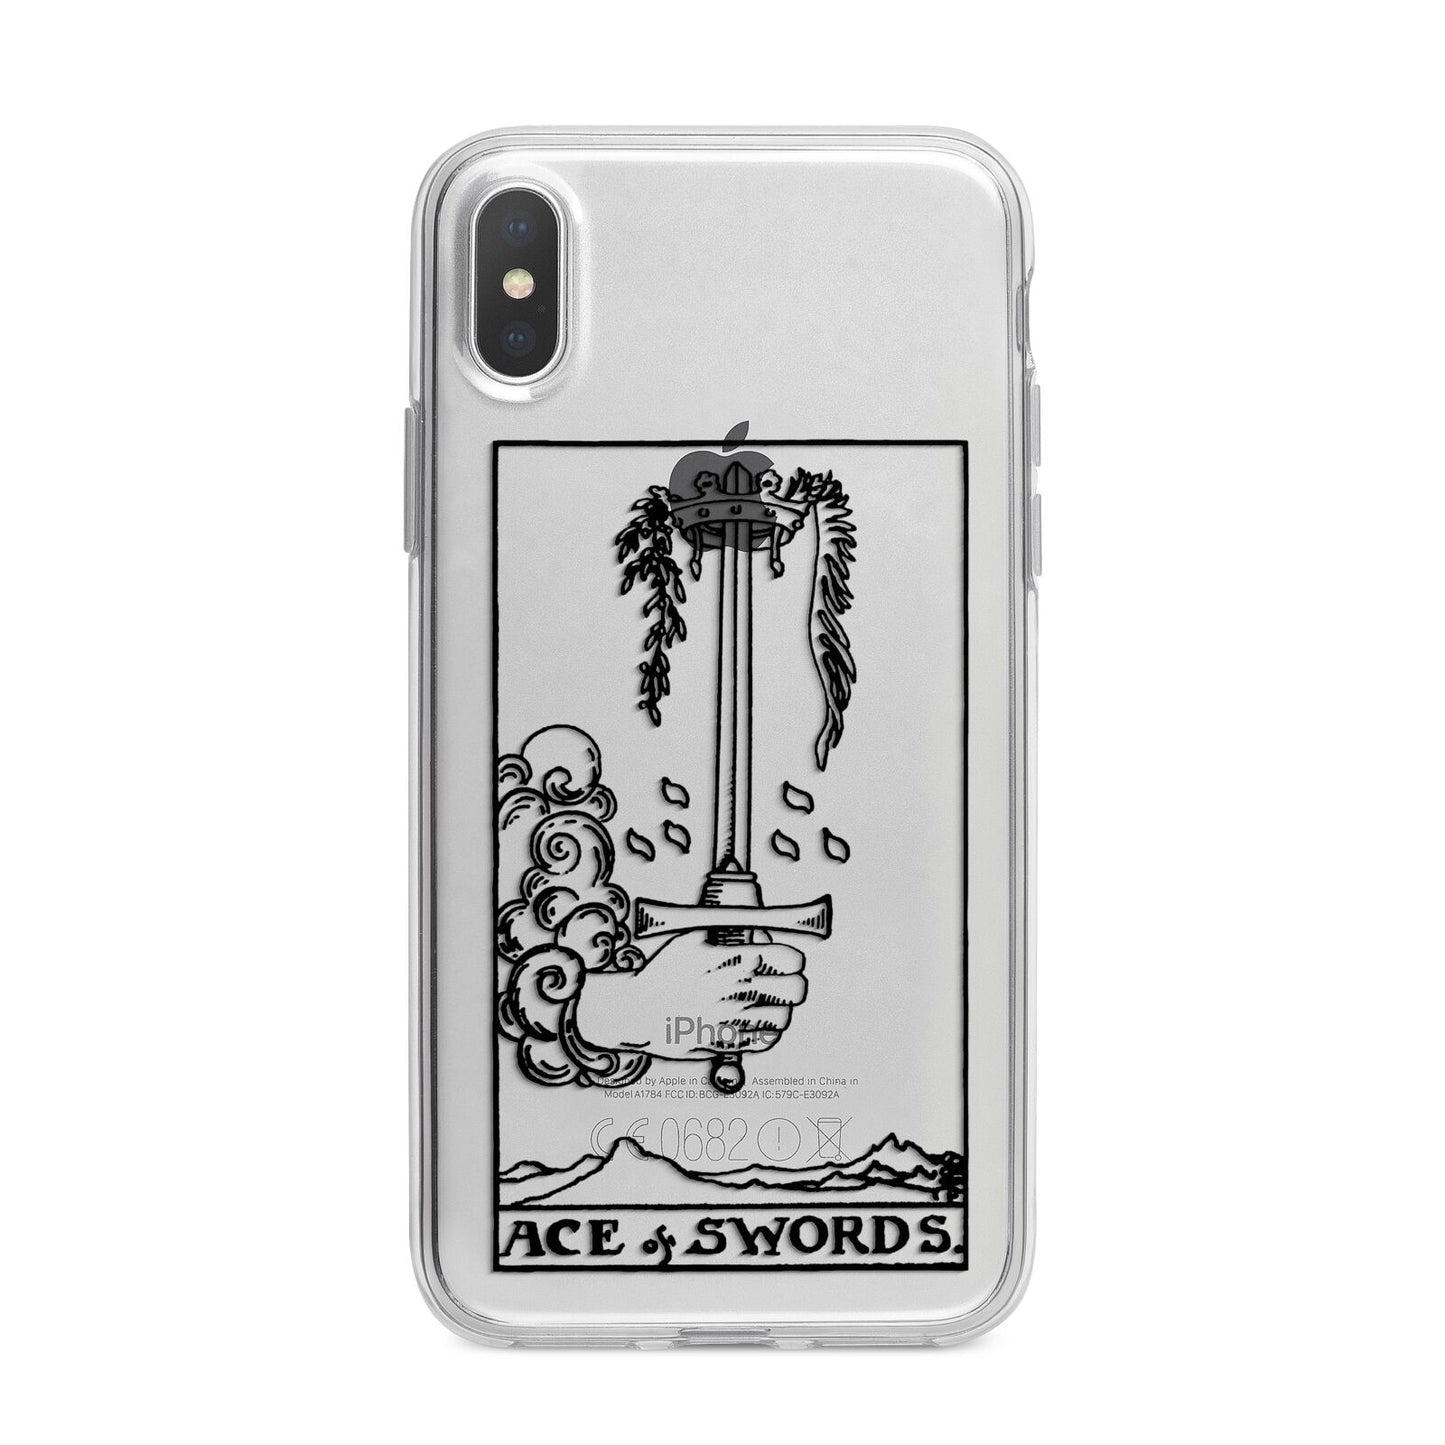 Ace of Swords Monochrome iPhone X Bumper Case on Silver iPhone Alternative Image 1